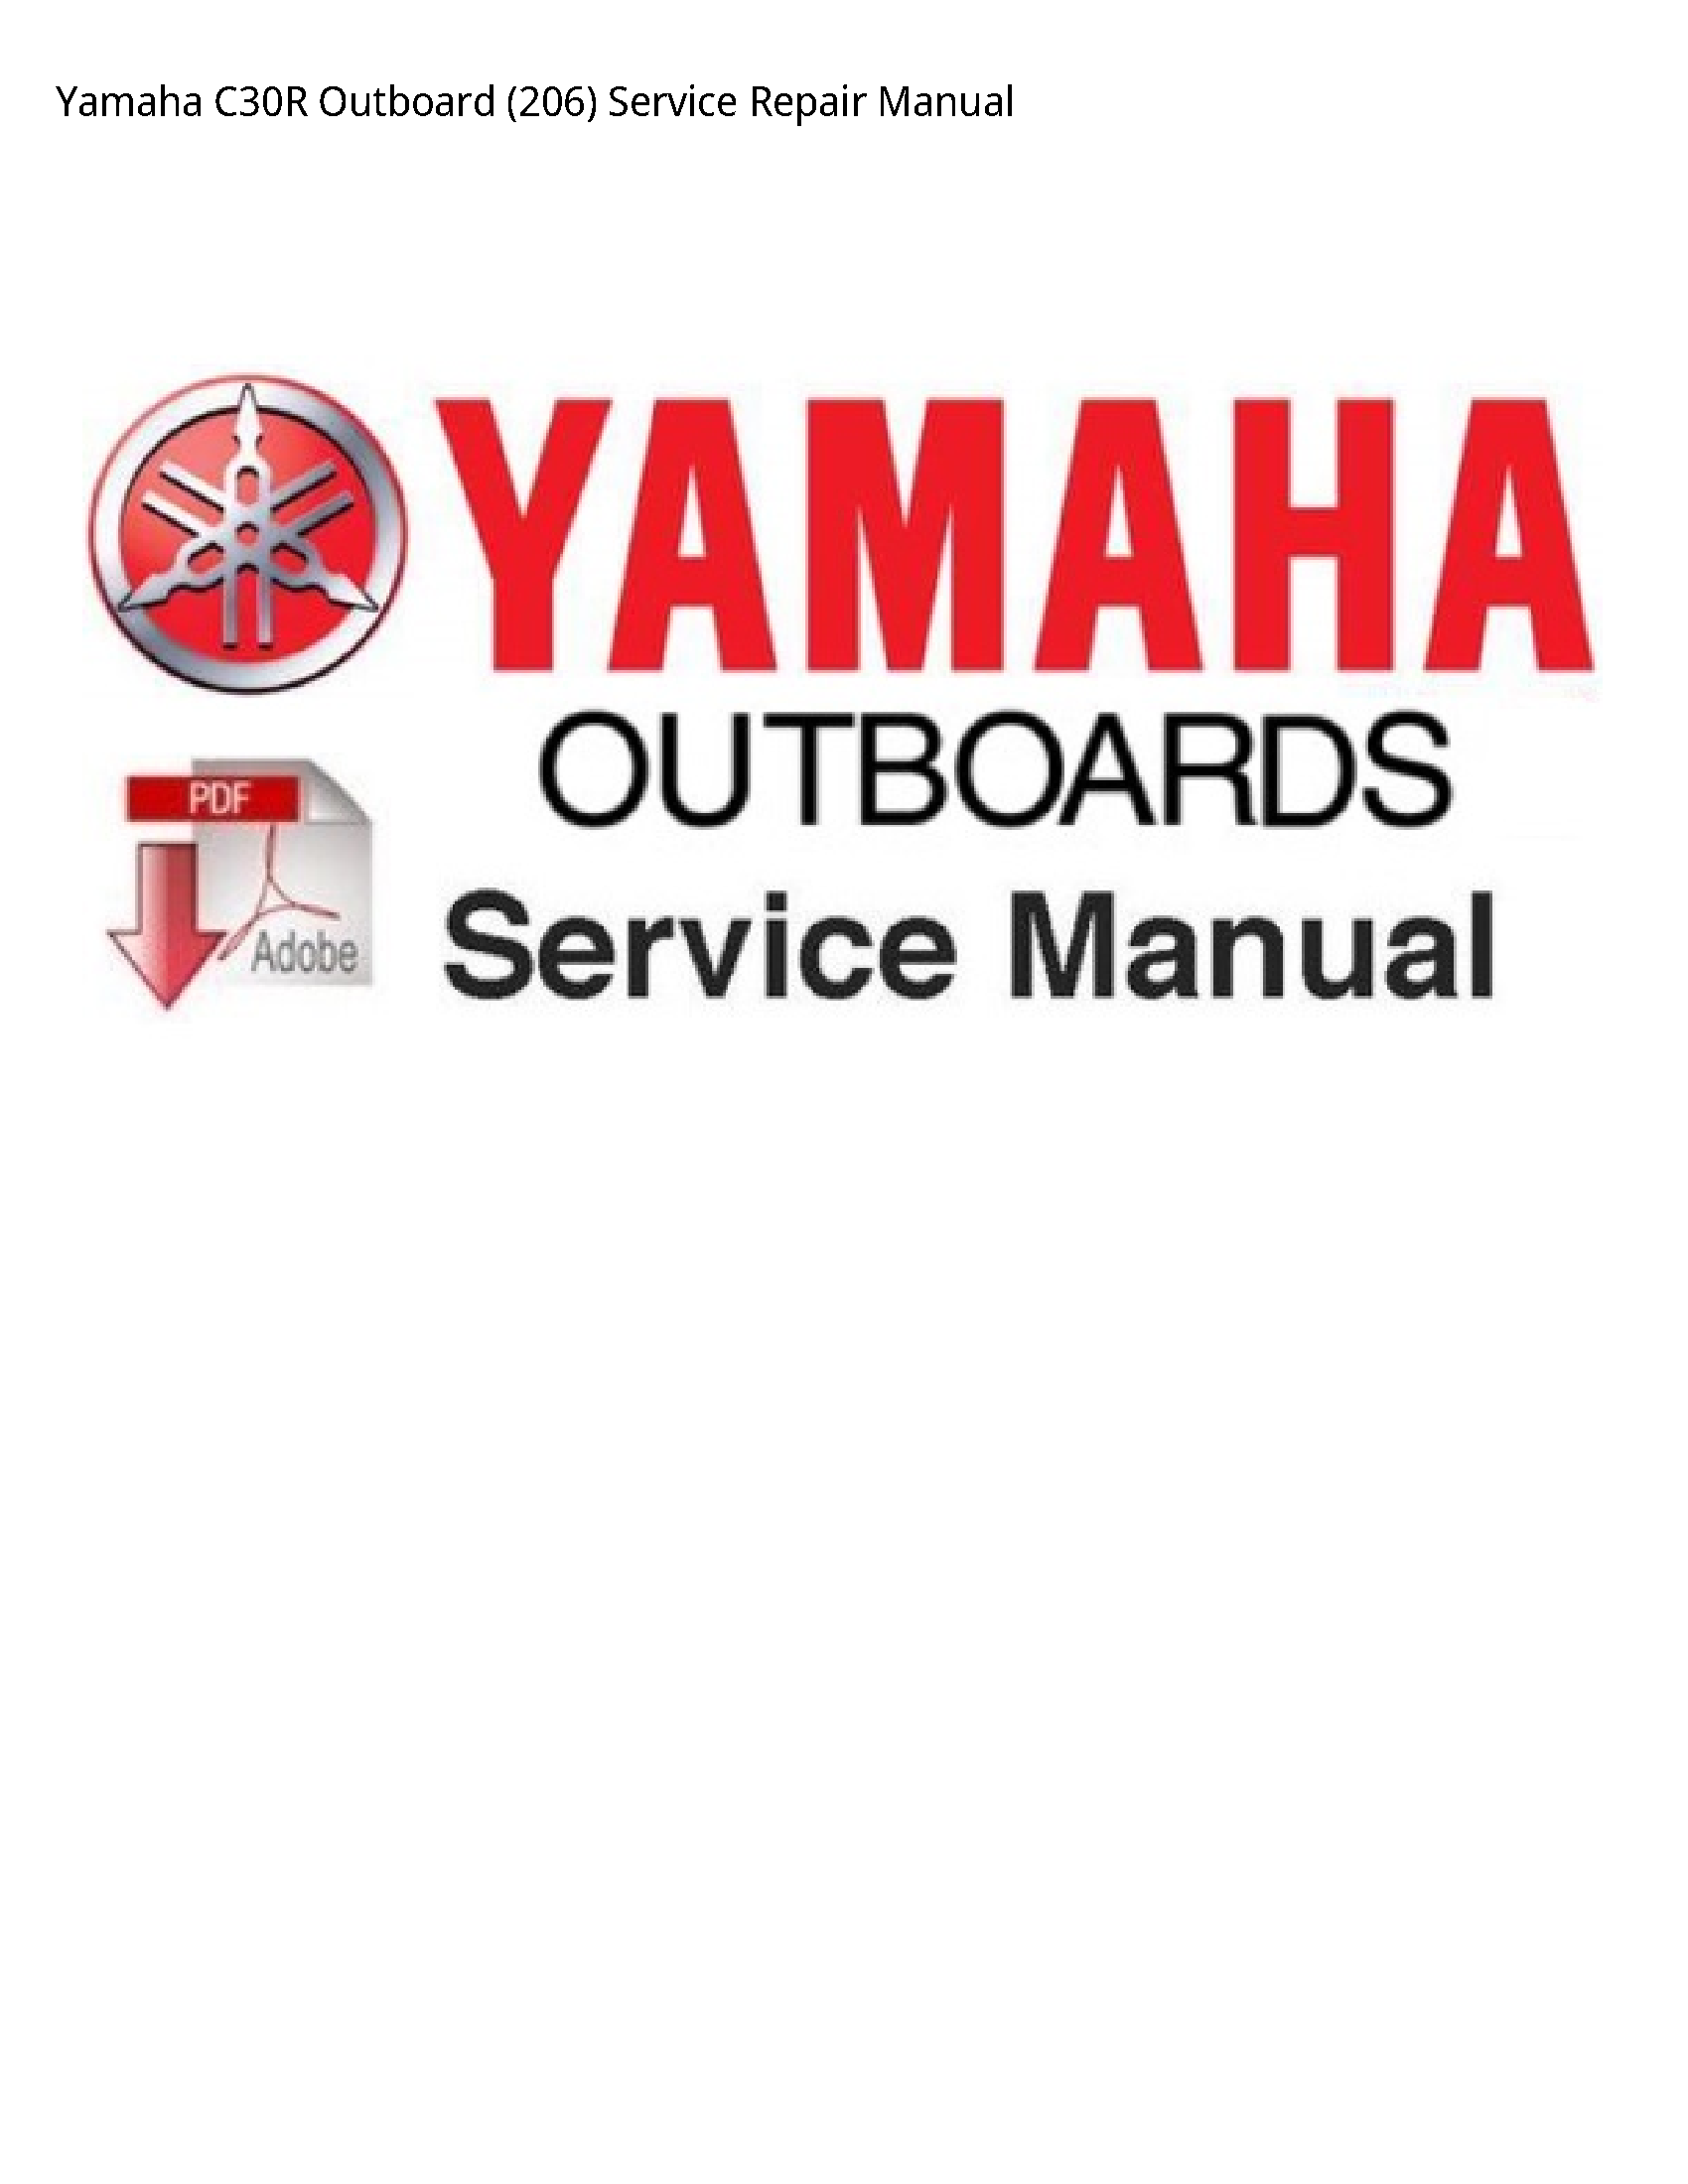 Yamaha C30R Outboard manual